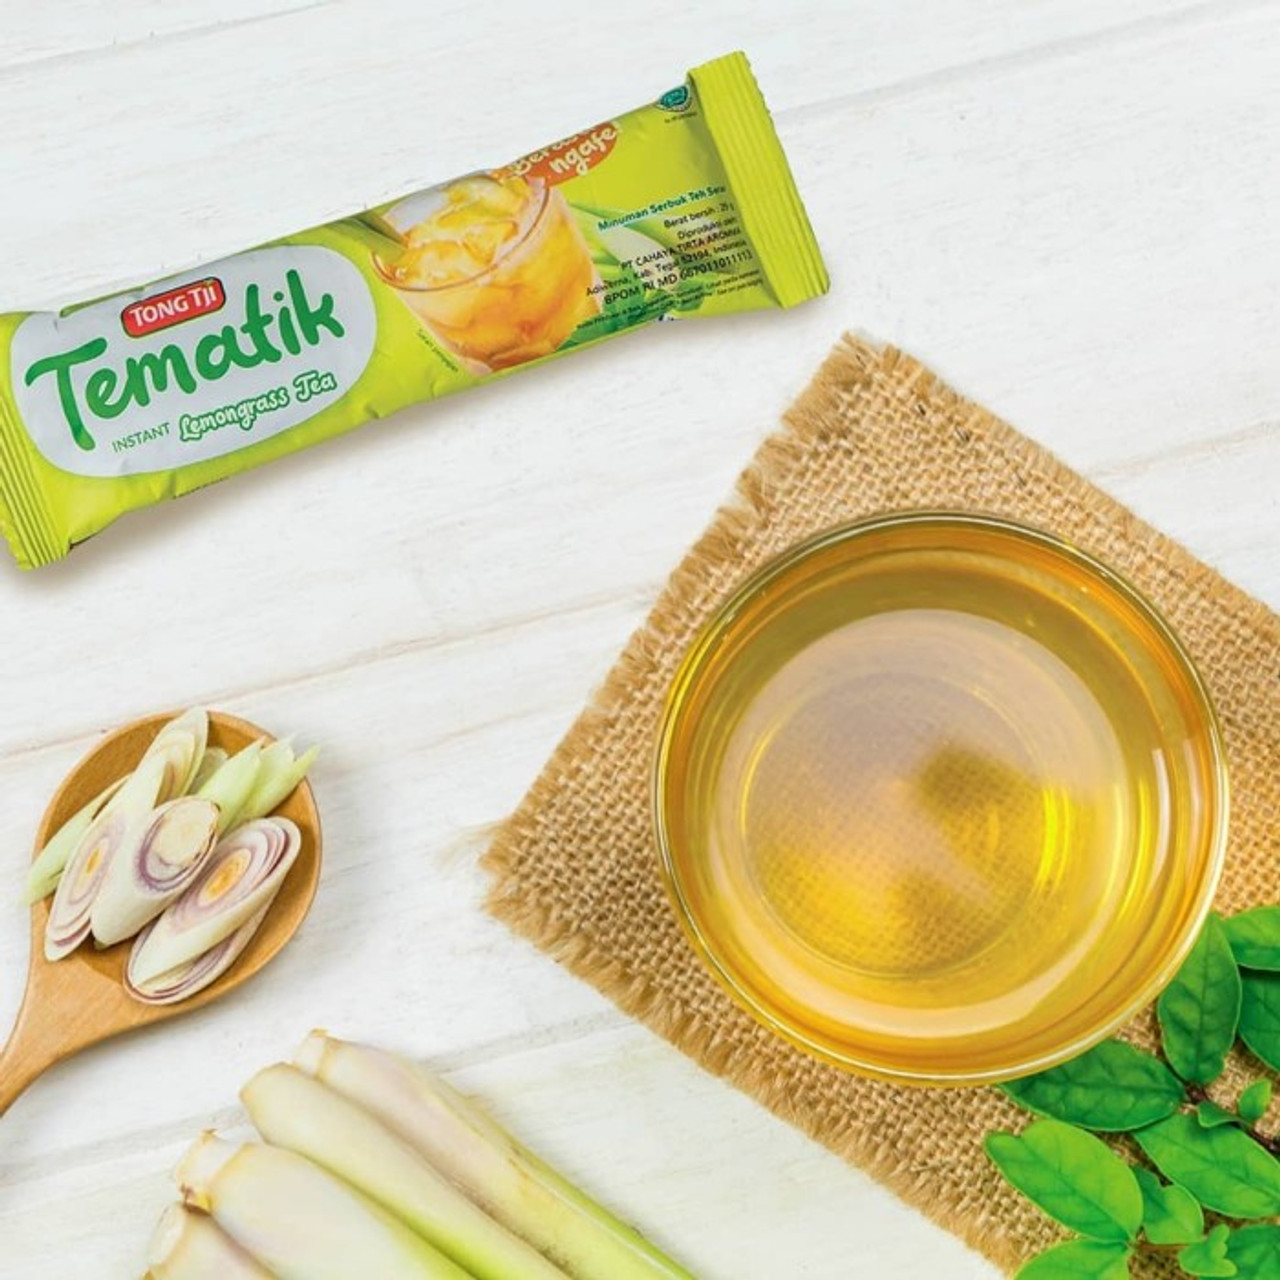 Tong Tji Tematik Instant Lemongrass 10 sachet 10 sachets